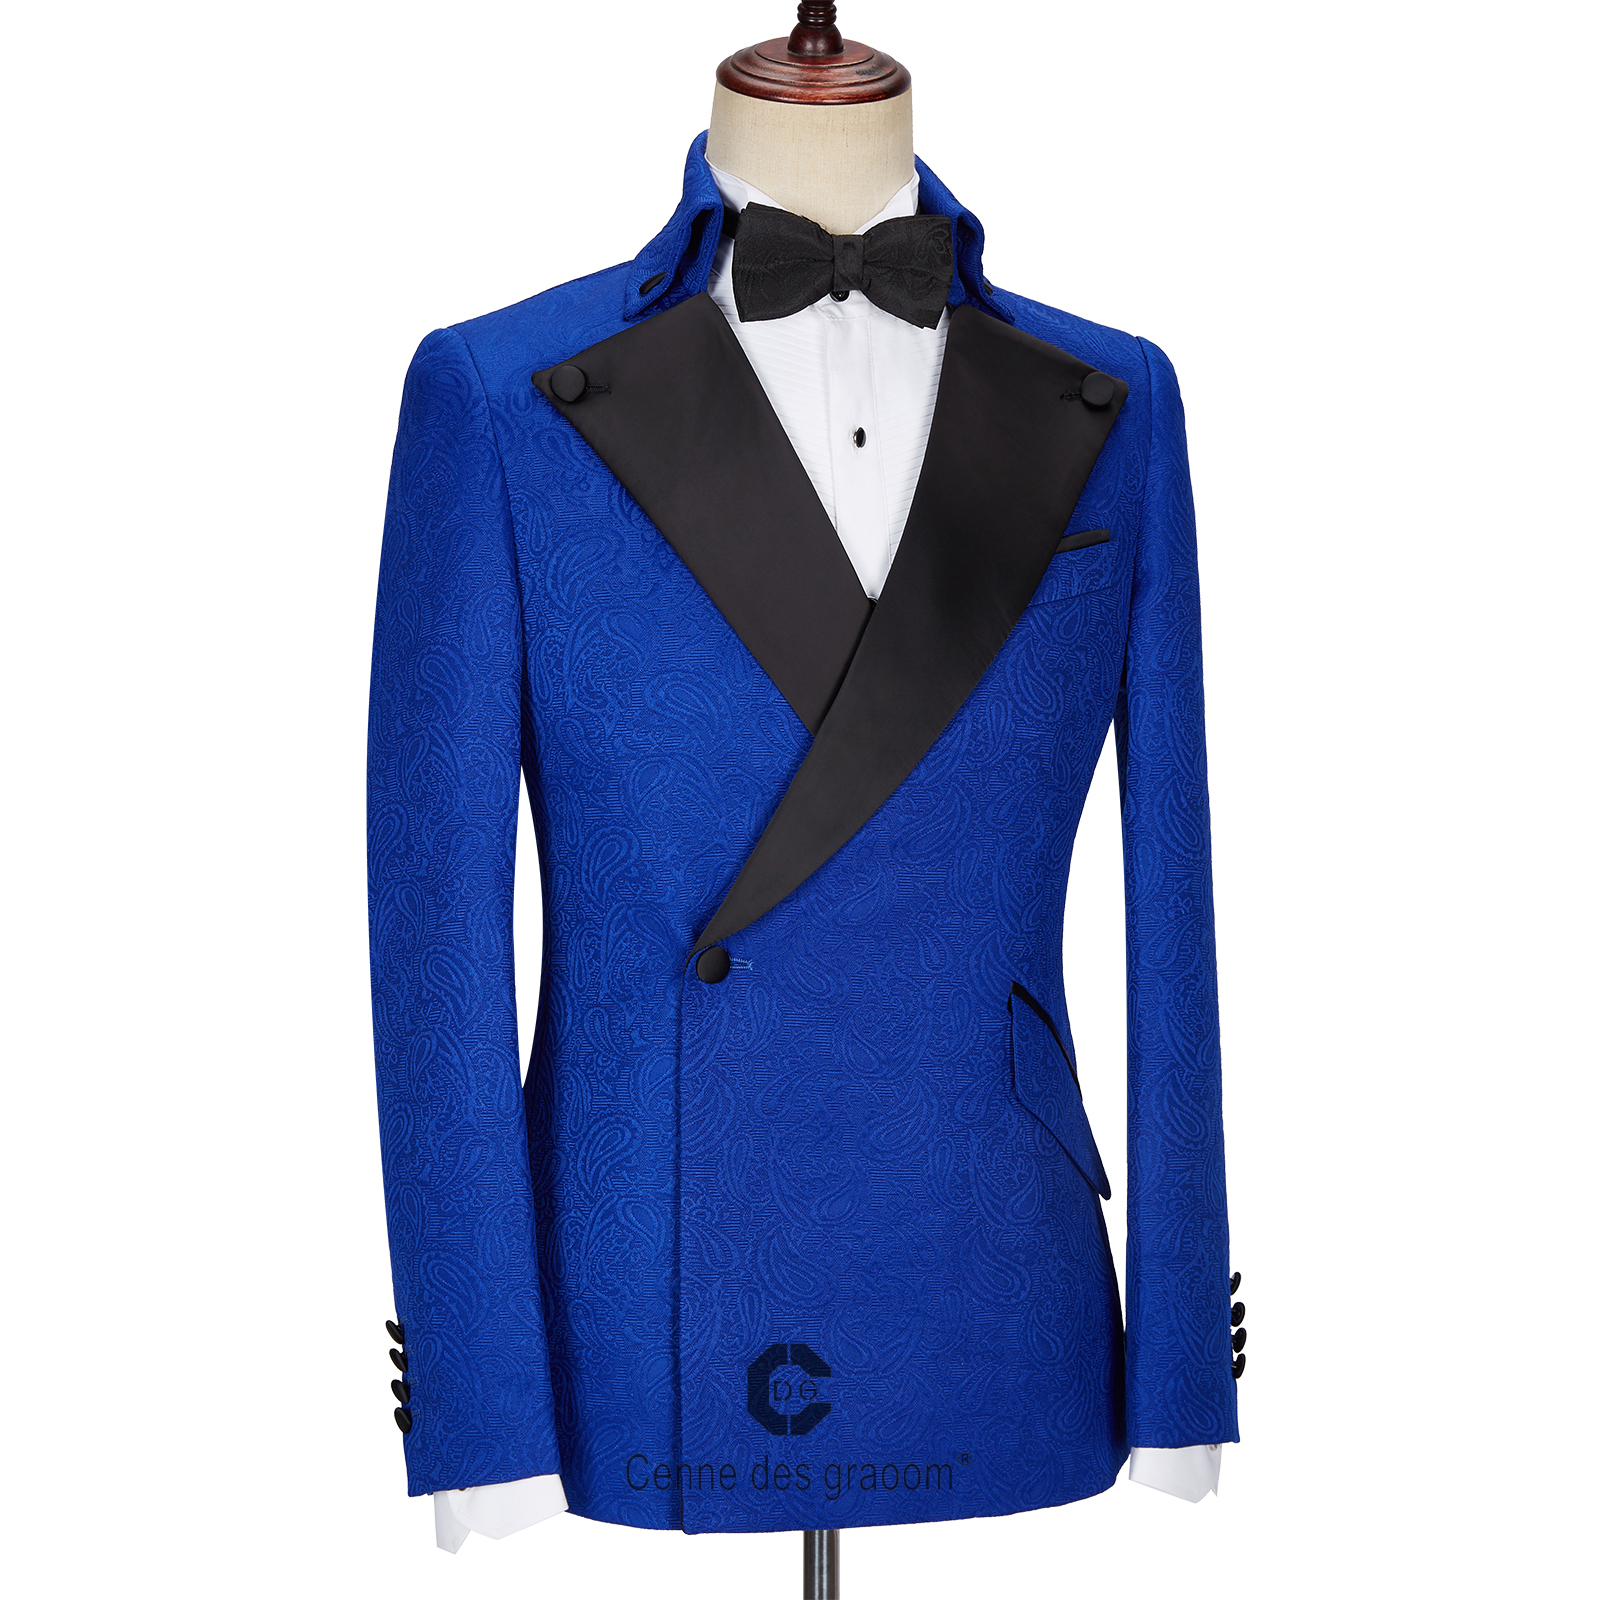 Cenne-Des-Graoom-Latest-Coat-Design-Men-Suits-Tailor-Made-Tuxedo-2-Pieces-Blazers-Blue-Wedding-2.jpg